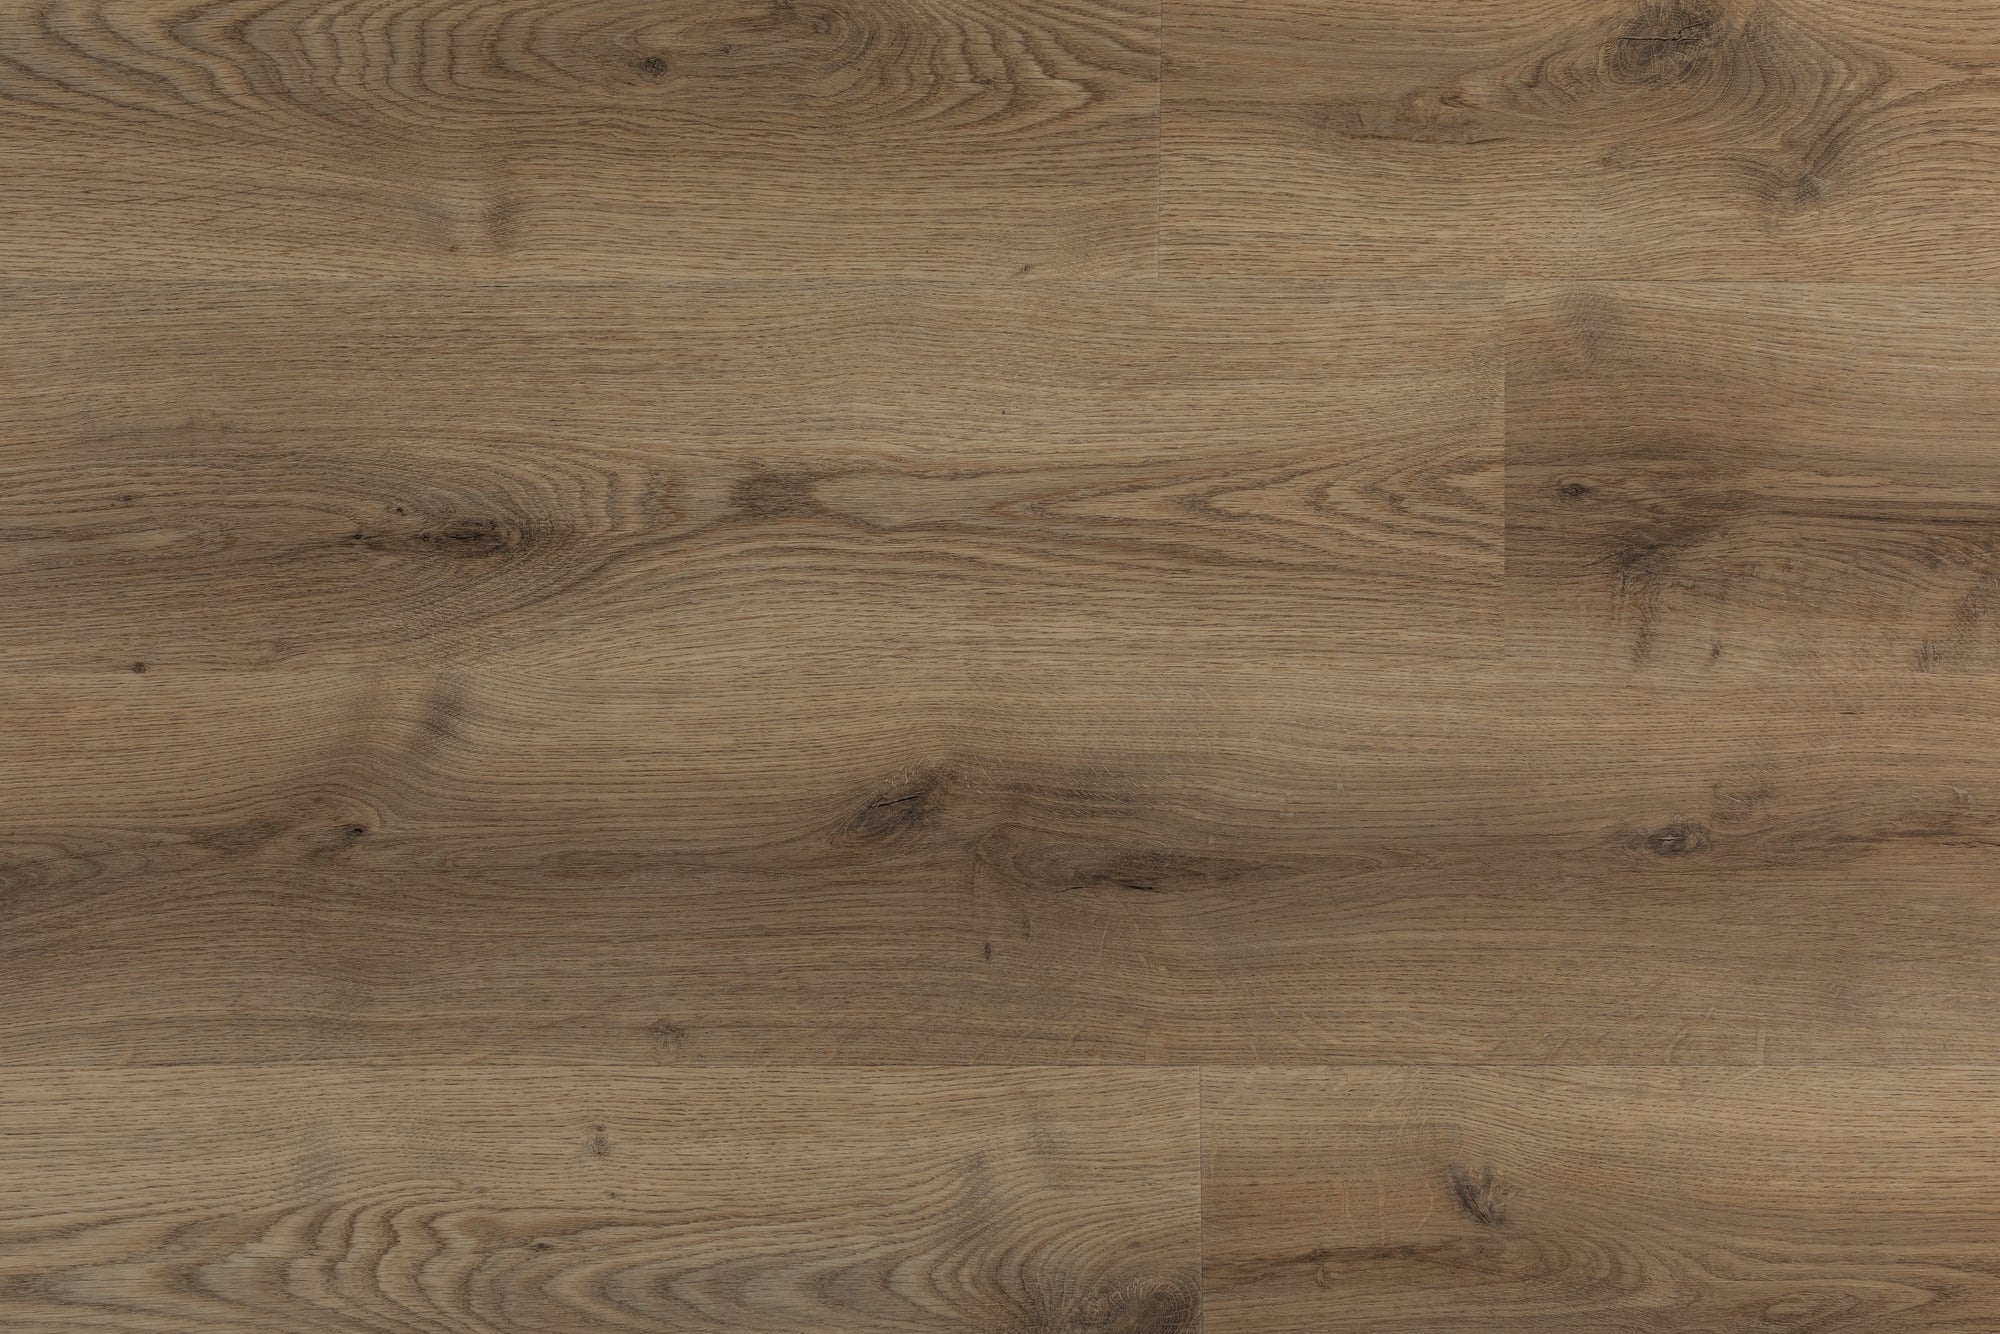 Willow Maverick luxury vinyl plank underlayment from our vinyl flooring collection